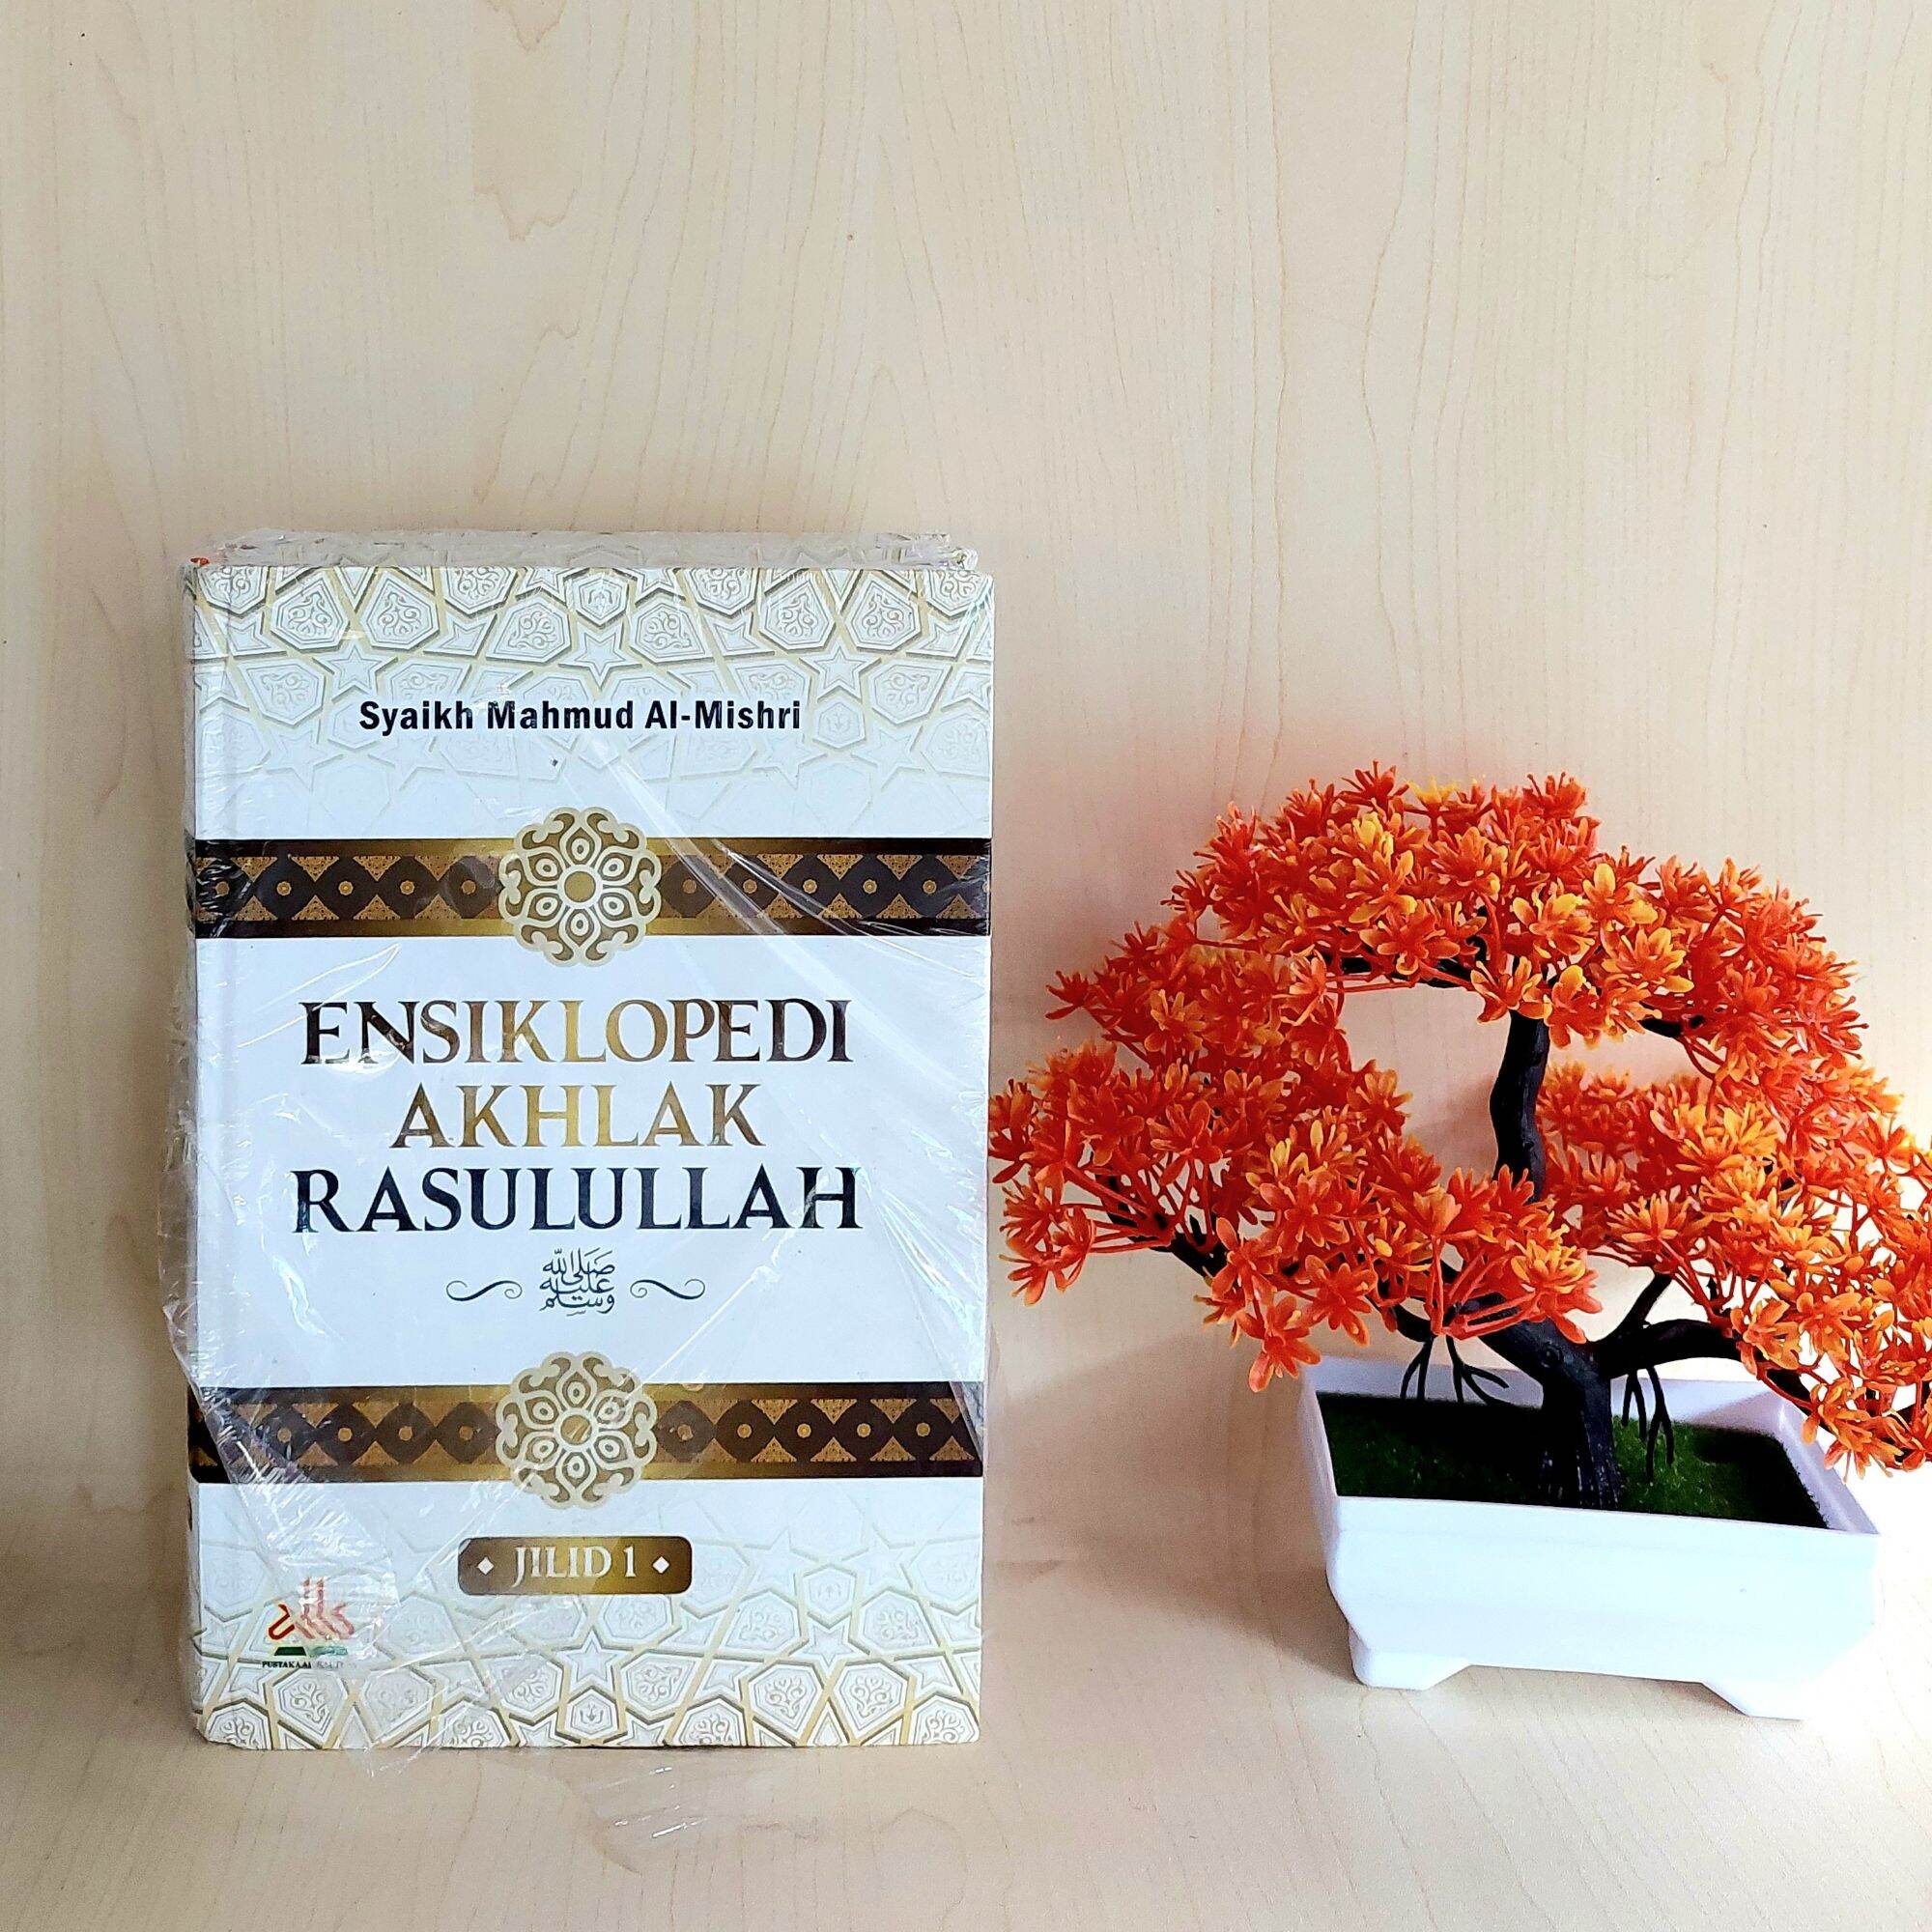 Ensiklopedi Akhlak Rasulullah Lazada Indonesia